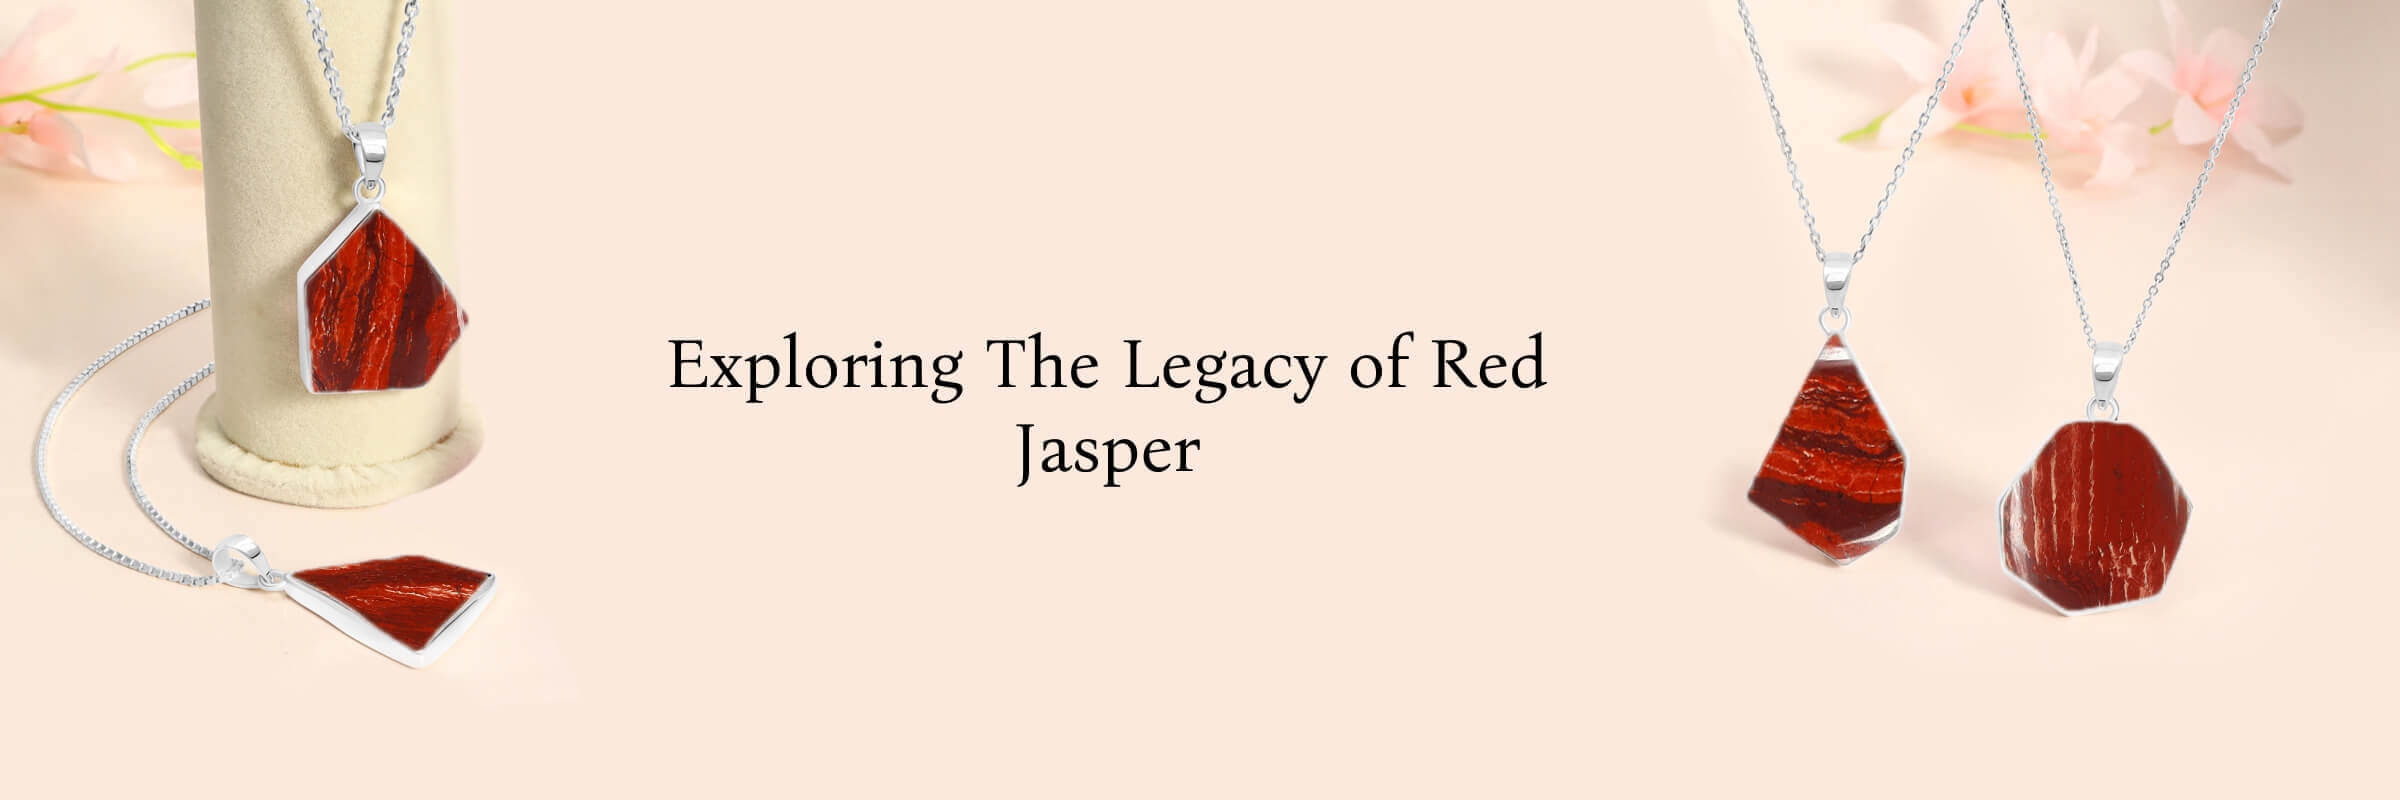 History of Red Jasper Gemstone